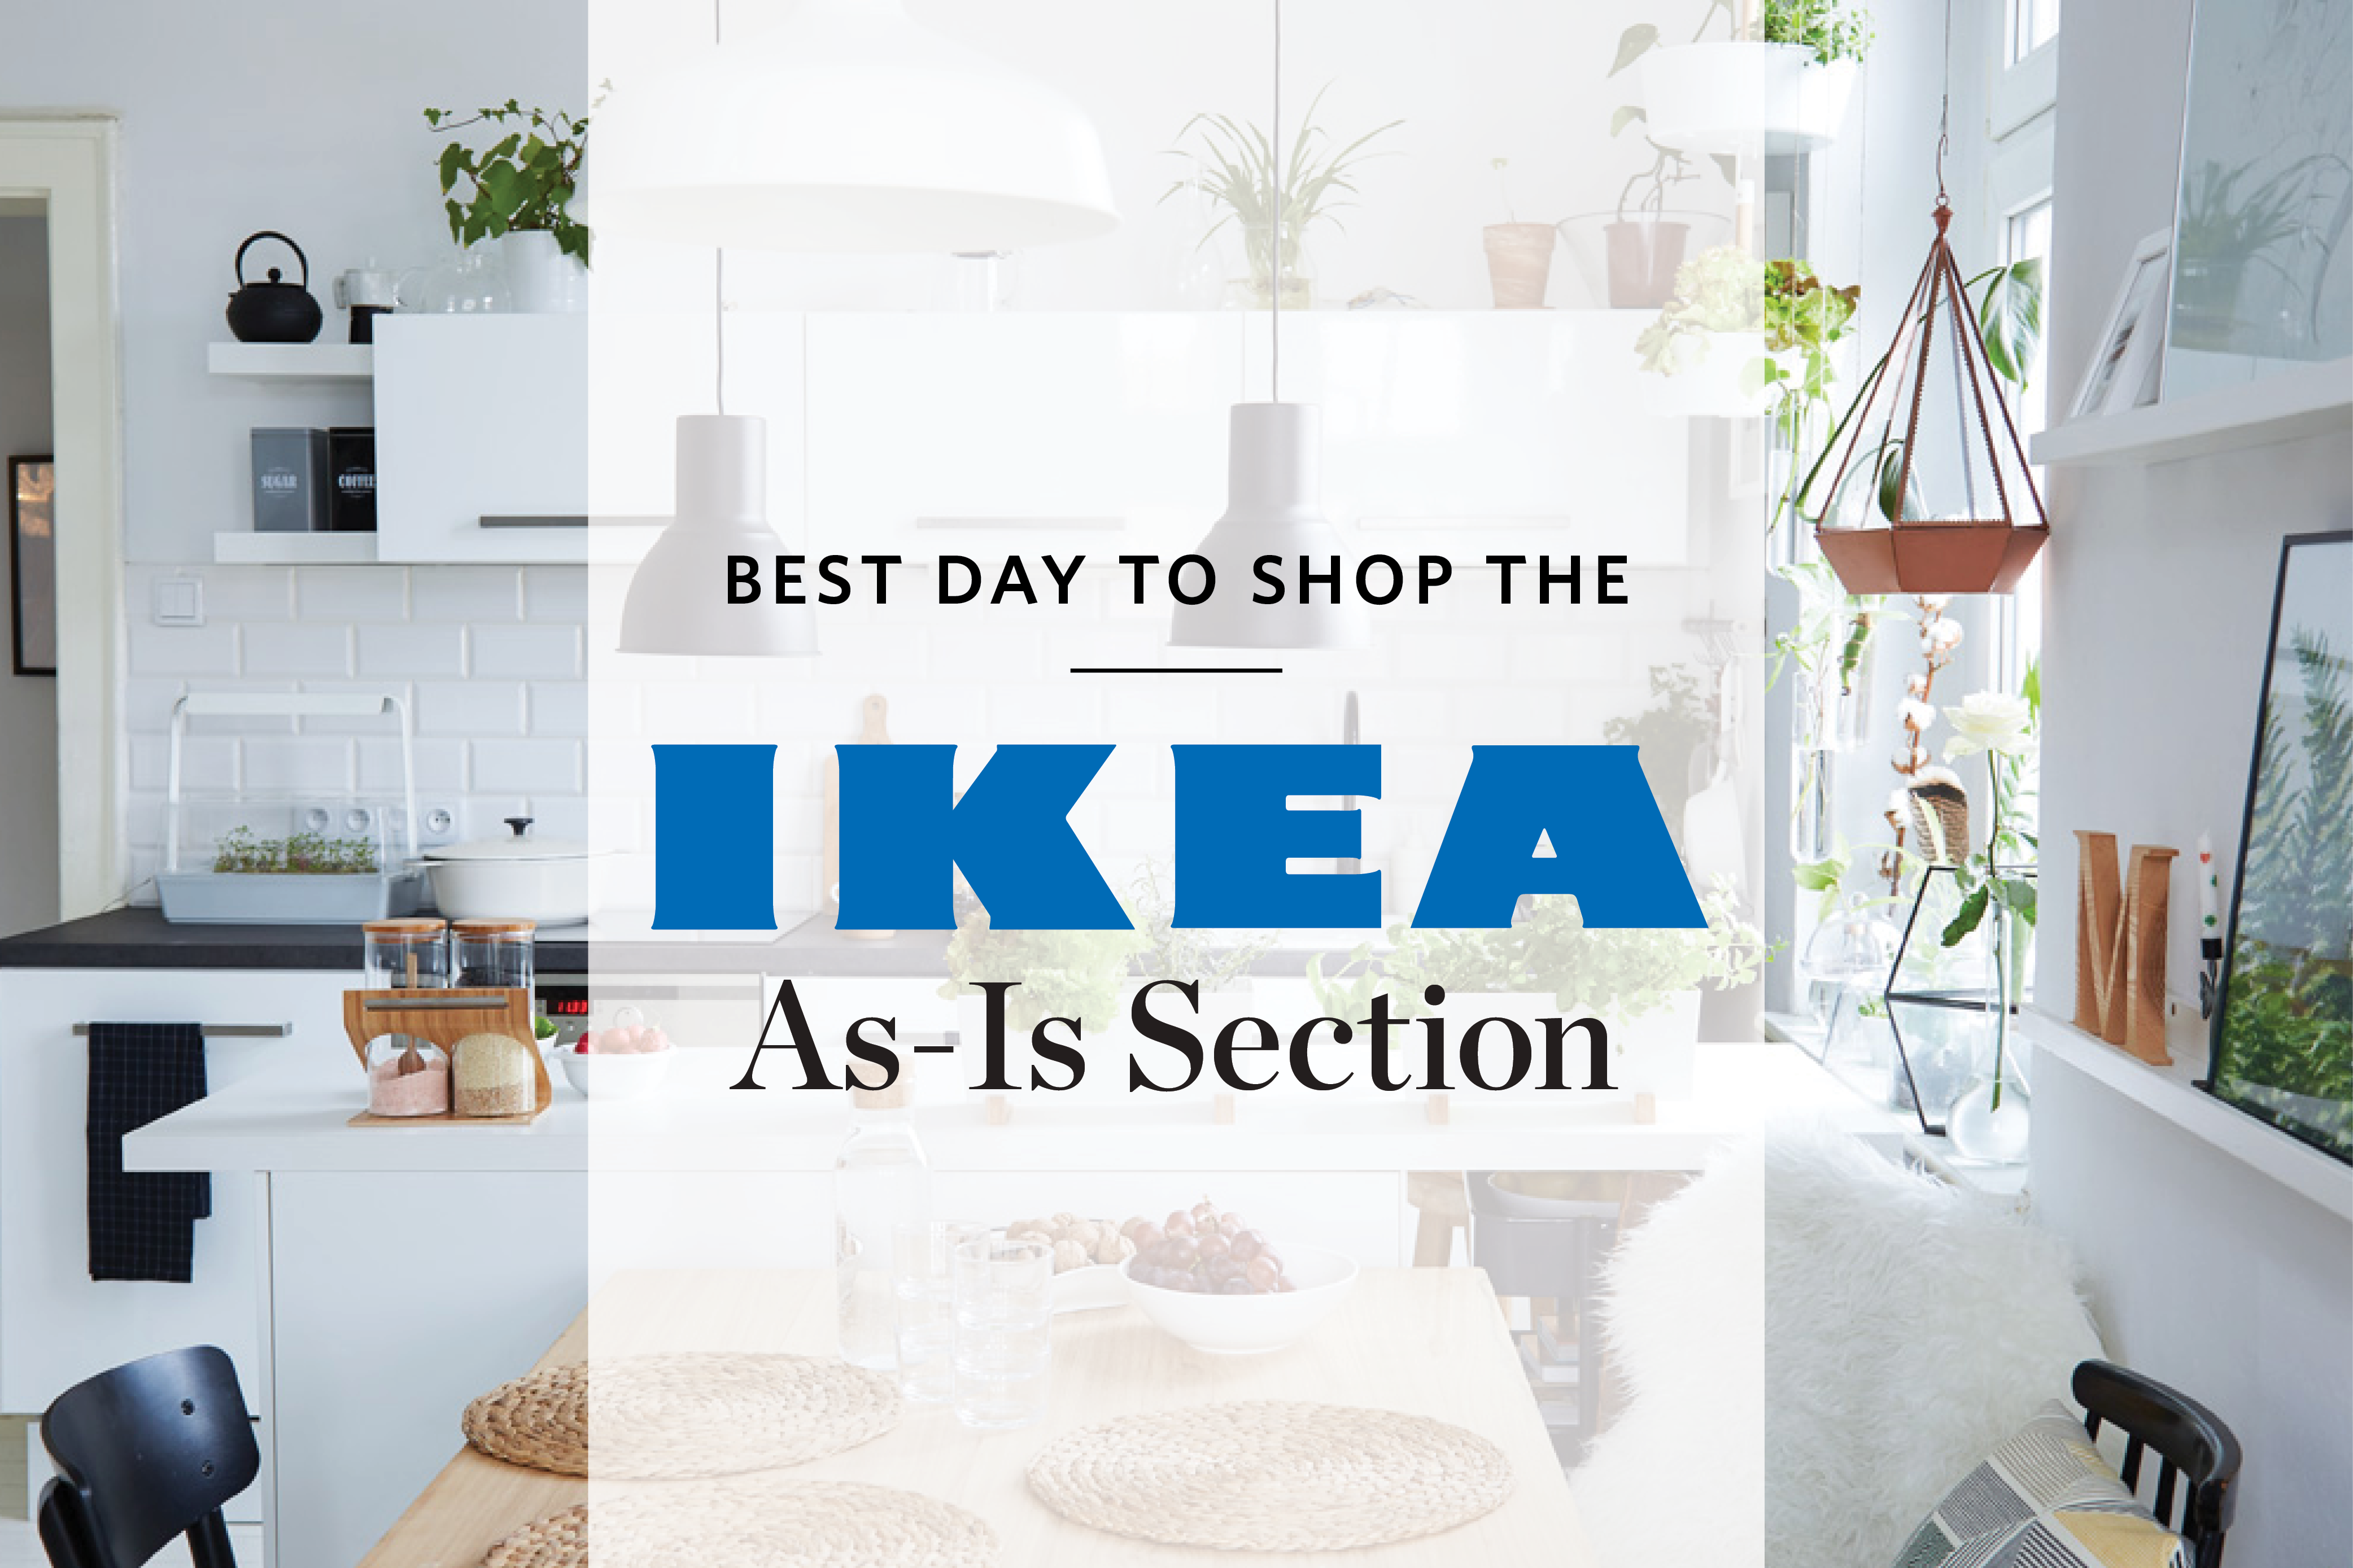 How to shop at IKEA - IKEA